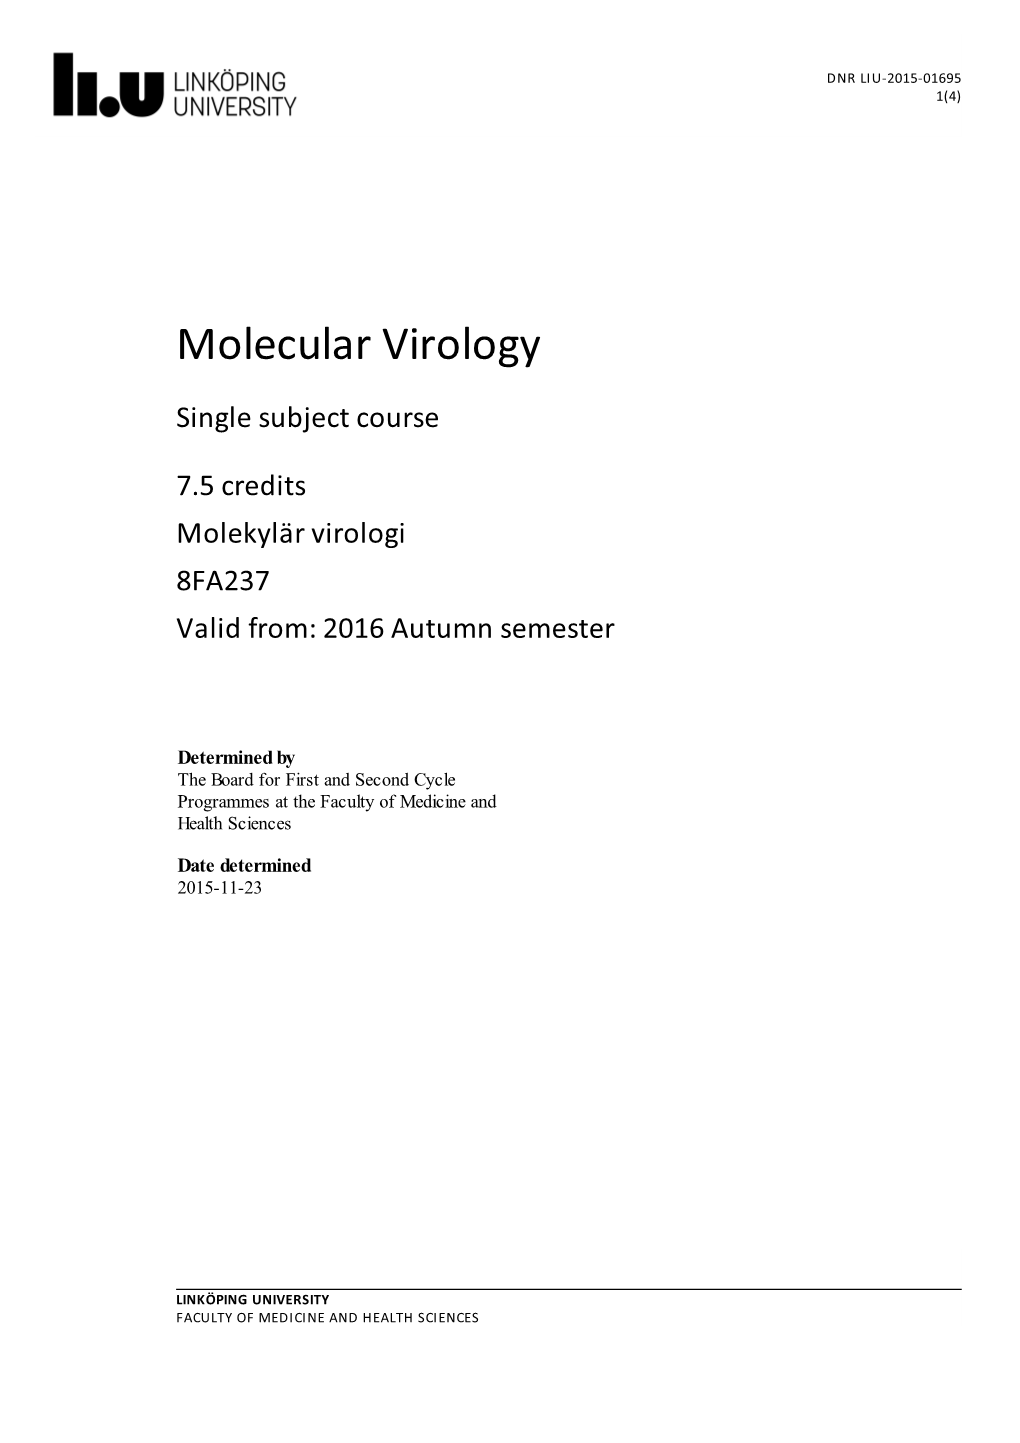 Molecular Virology Single Subject Course 7.5 Credits Molekylär Virologi 8FA237 Valid From: 2016 Autumn Semester